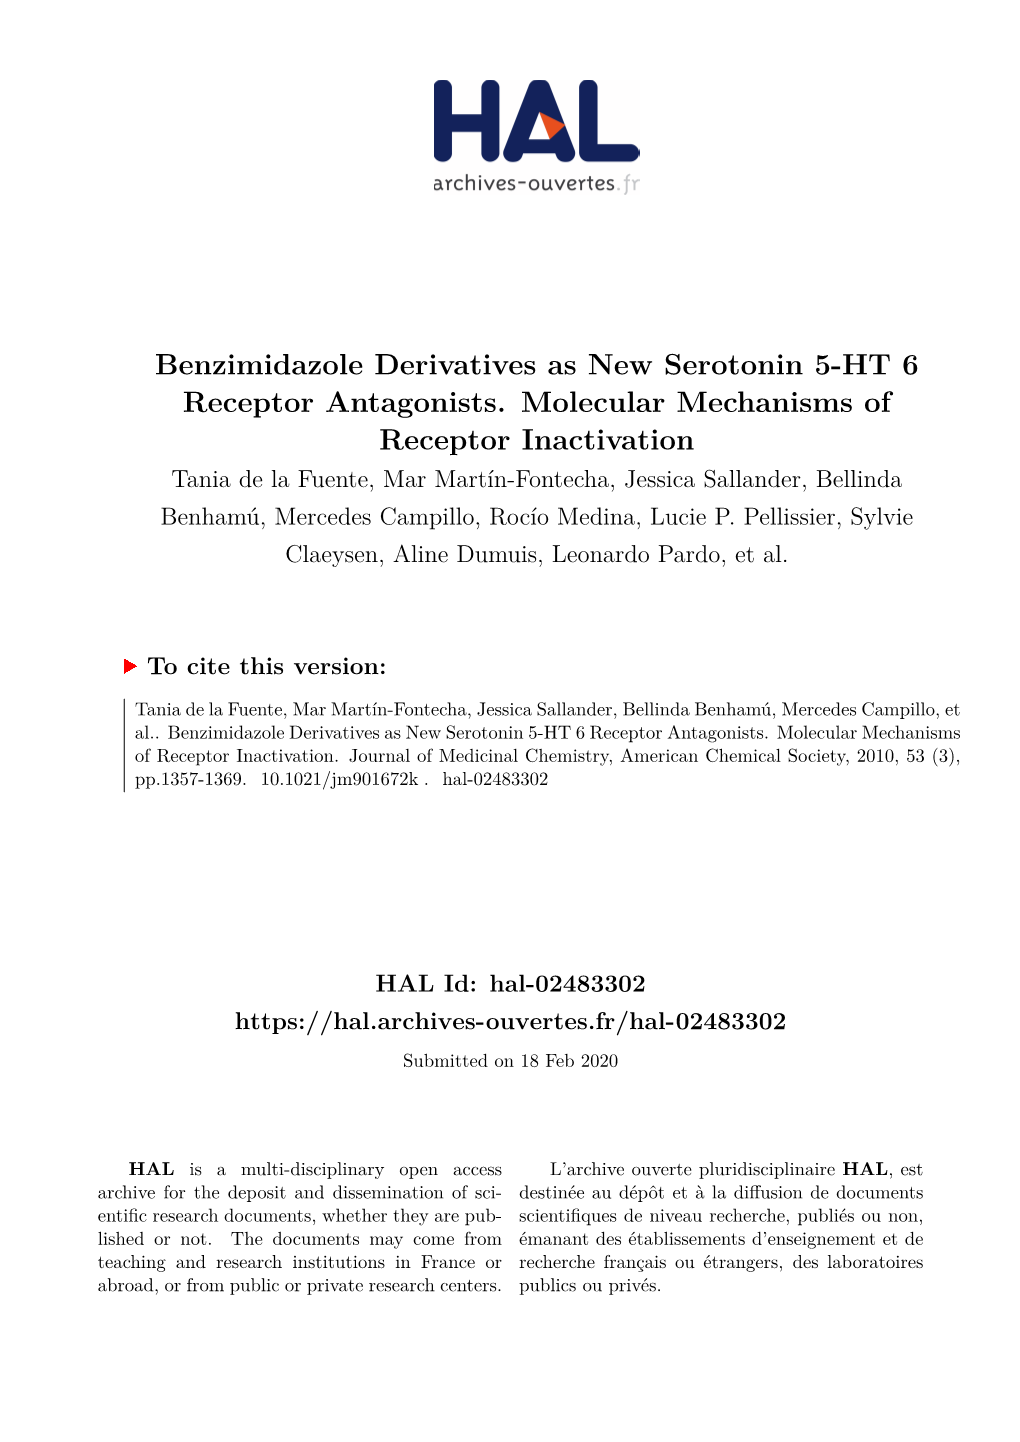 Benzimidazole Derivatives As New Serotonin 5-HT 6 Receptor Antagonists